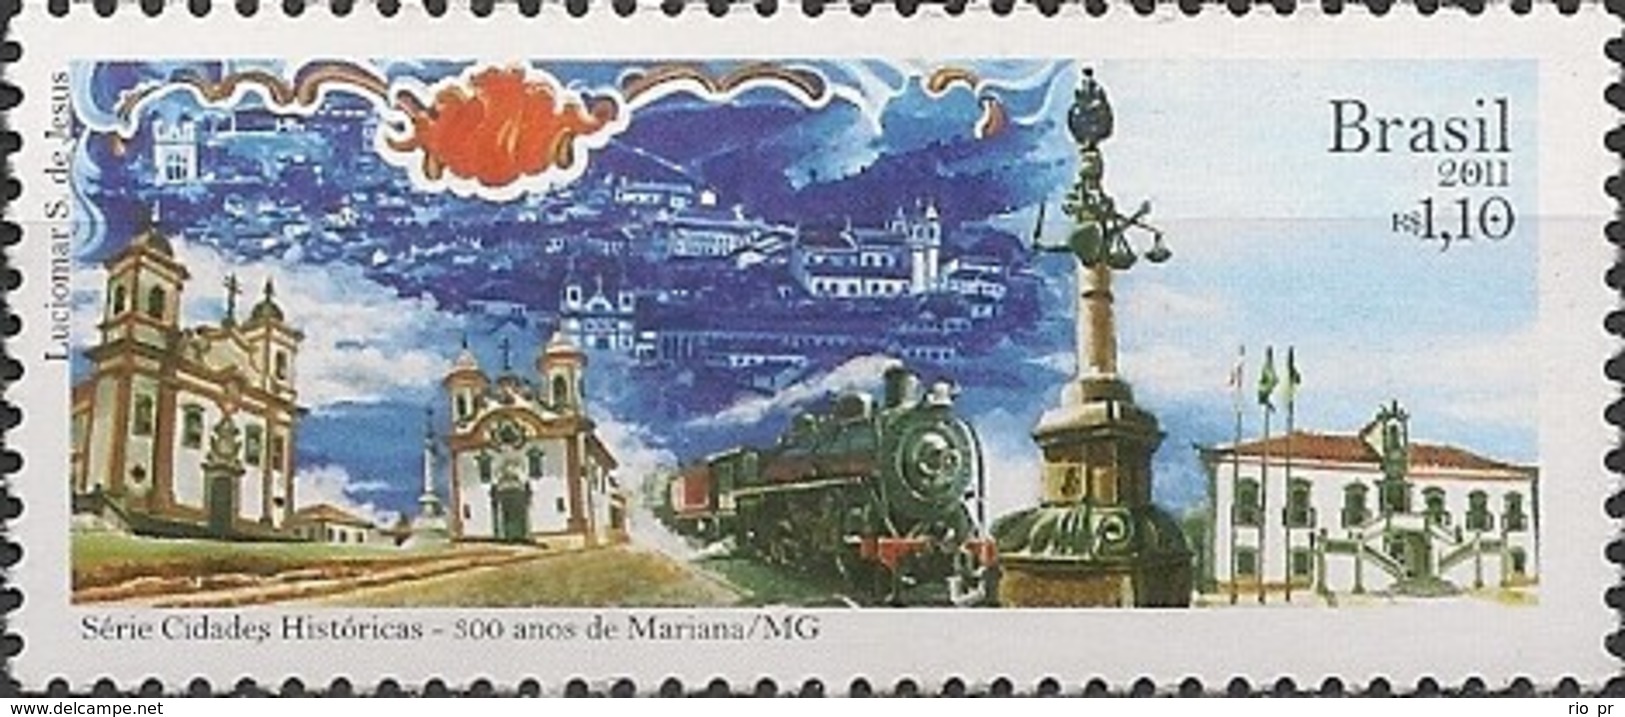 BRAZIL - HISTORICAL TOWNS SERIES, 300 YEARS OF MARIANA/MG 2011 - MNH - Nuevos